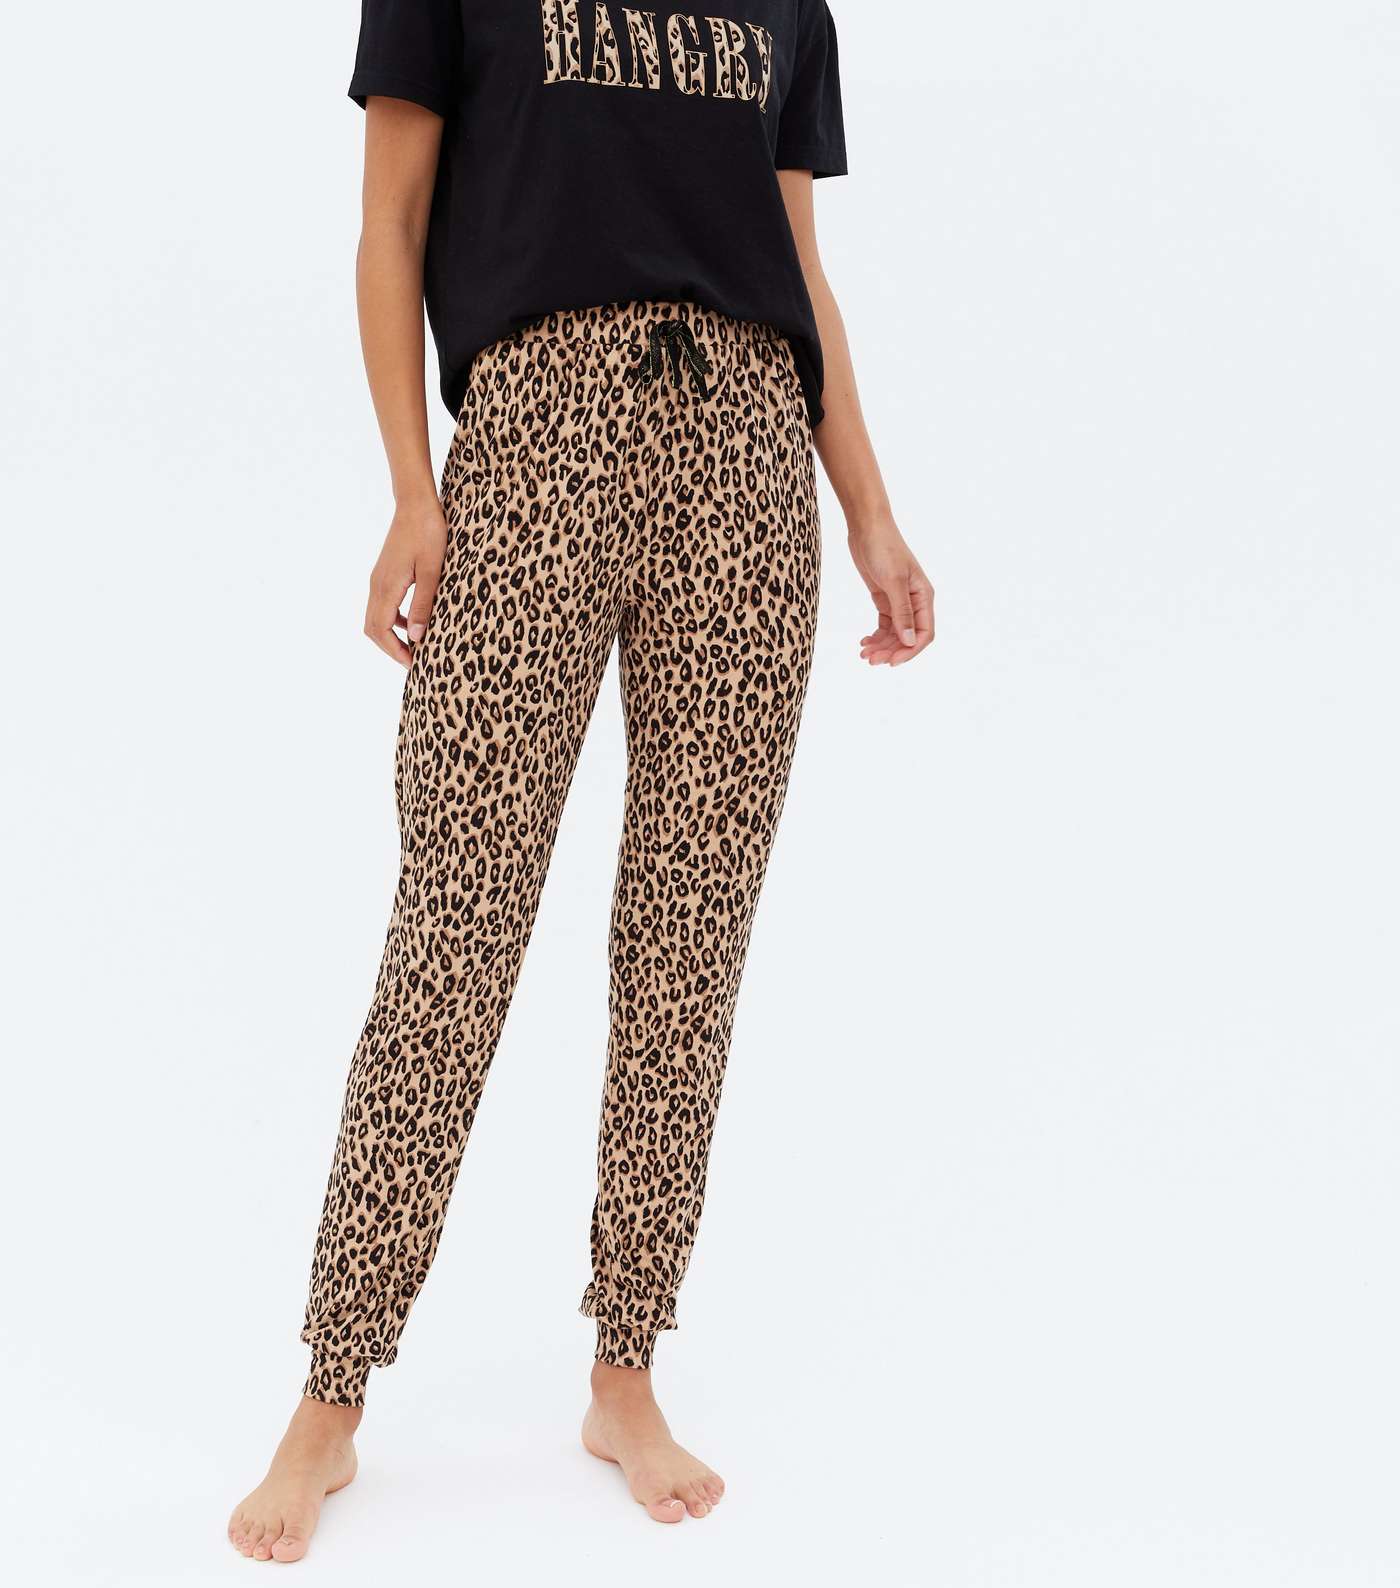 Tall Black Leopard Print Jogger Pyjama Set with Hangry Logo Image 3